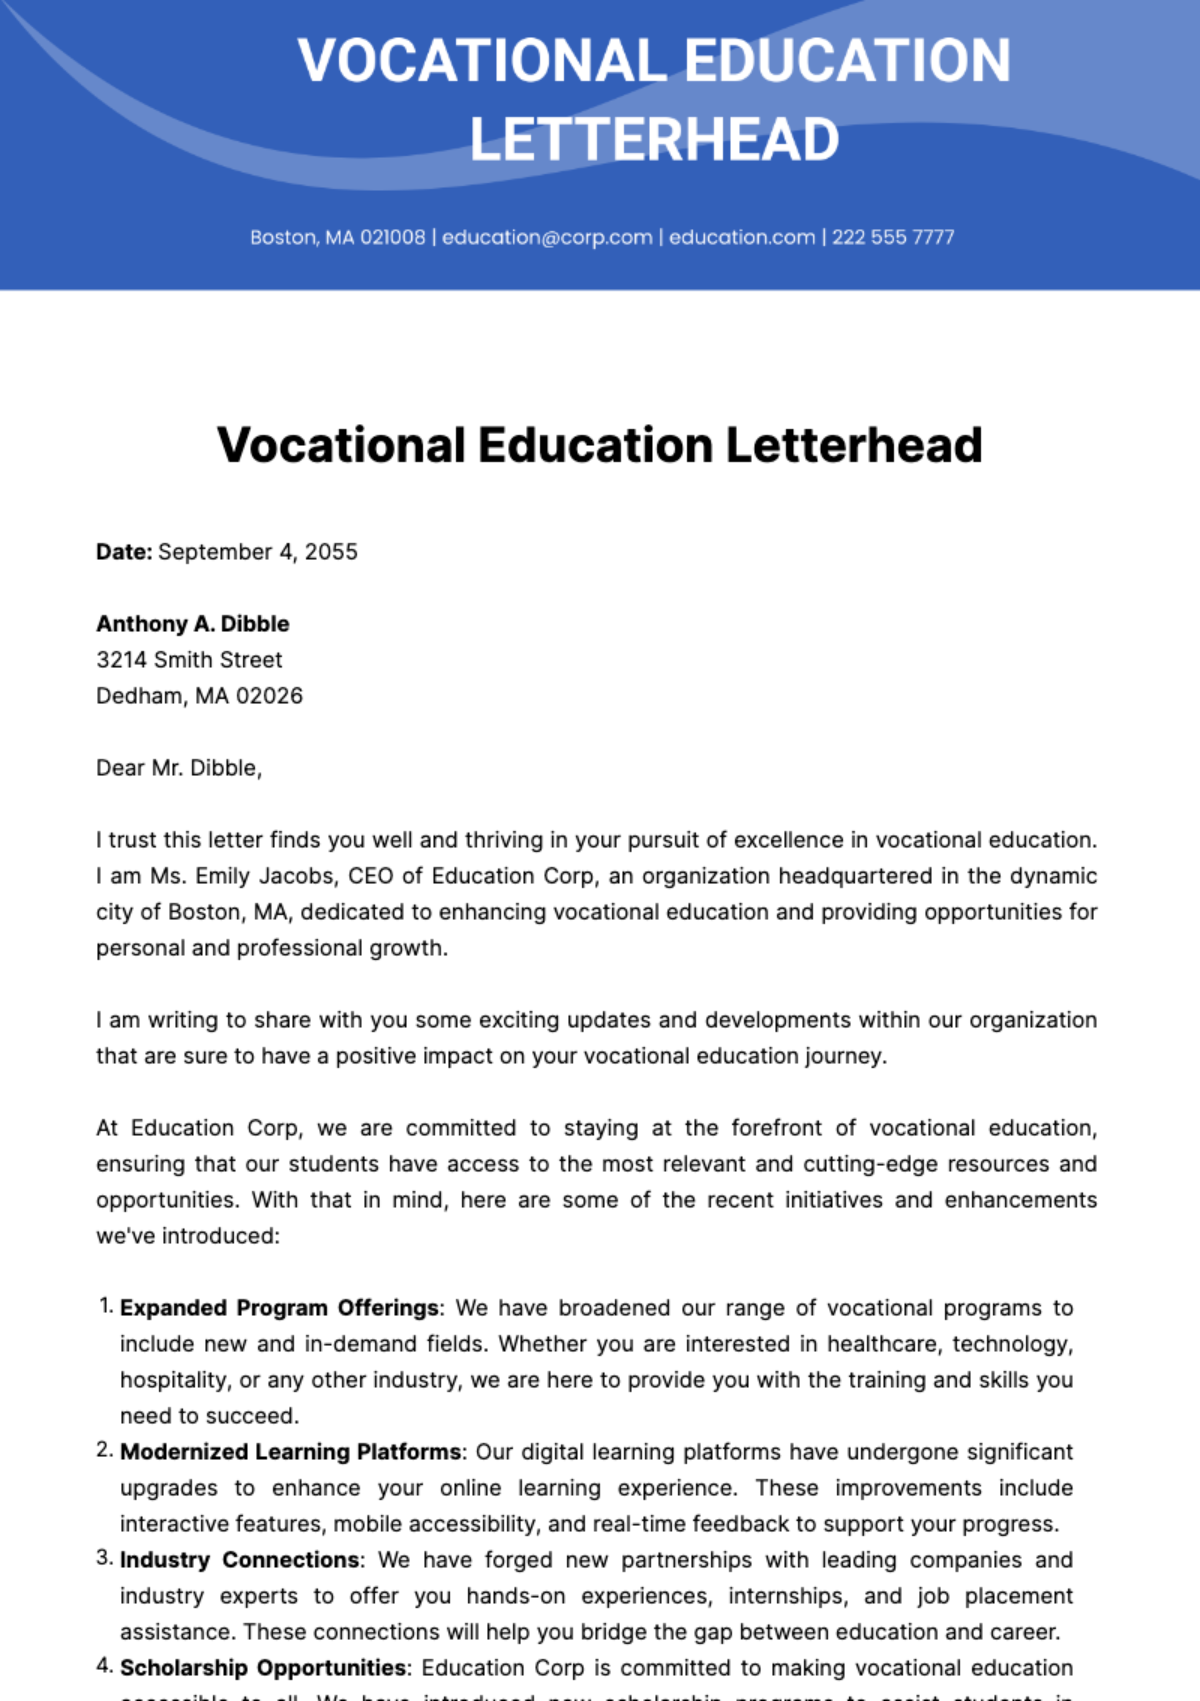 Free Vocational Education Letterhead Template